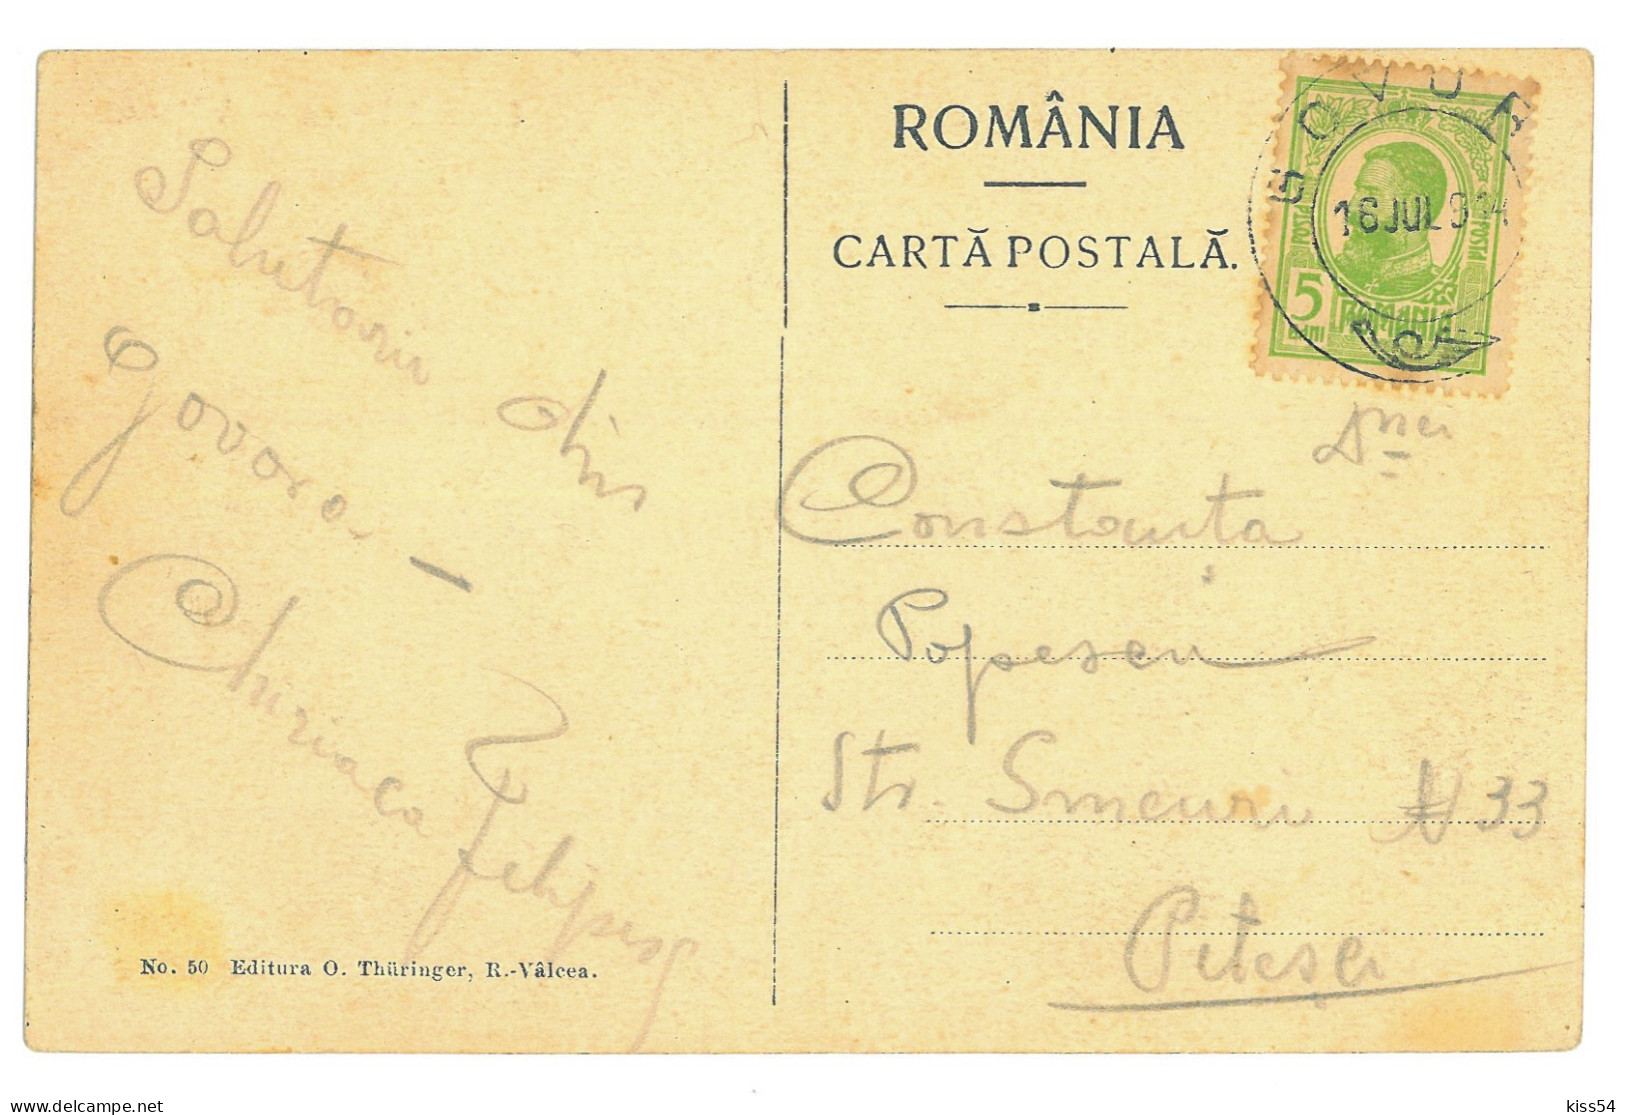 RO 35 - 18099 LOTRU, Valcea, Train On Tunnel, Romania - Old Postcard - Used - 1914 - Romania